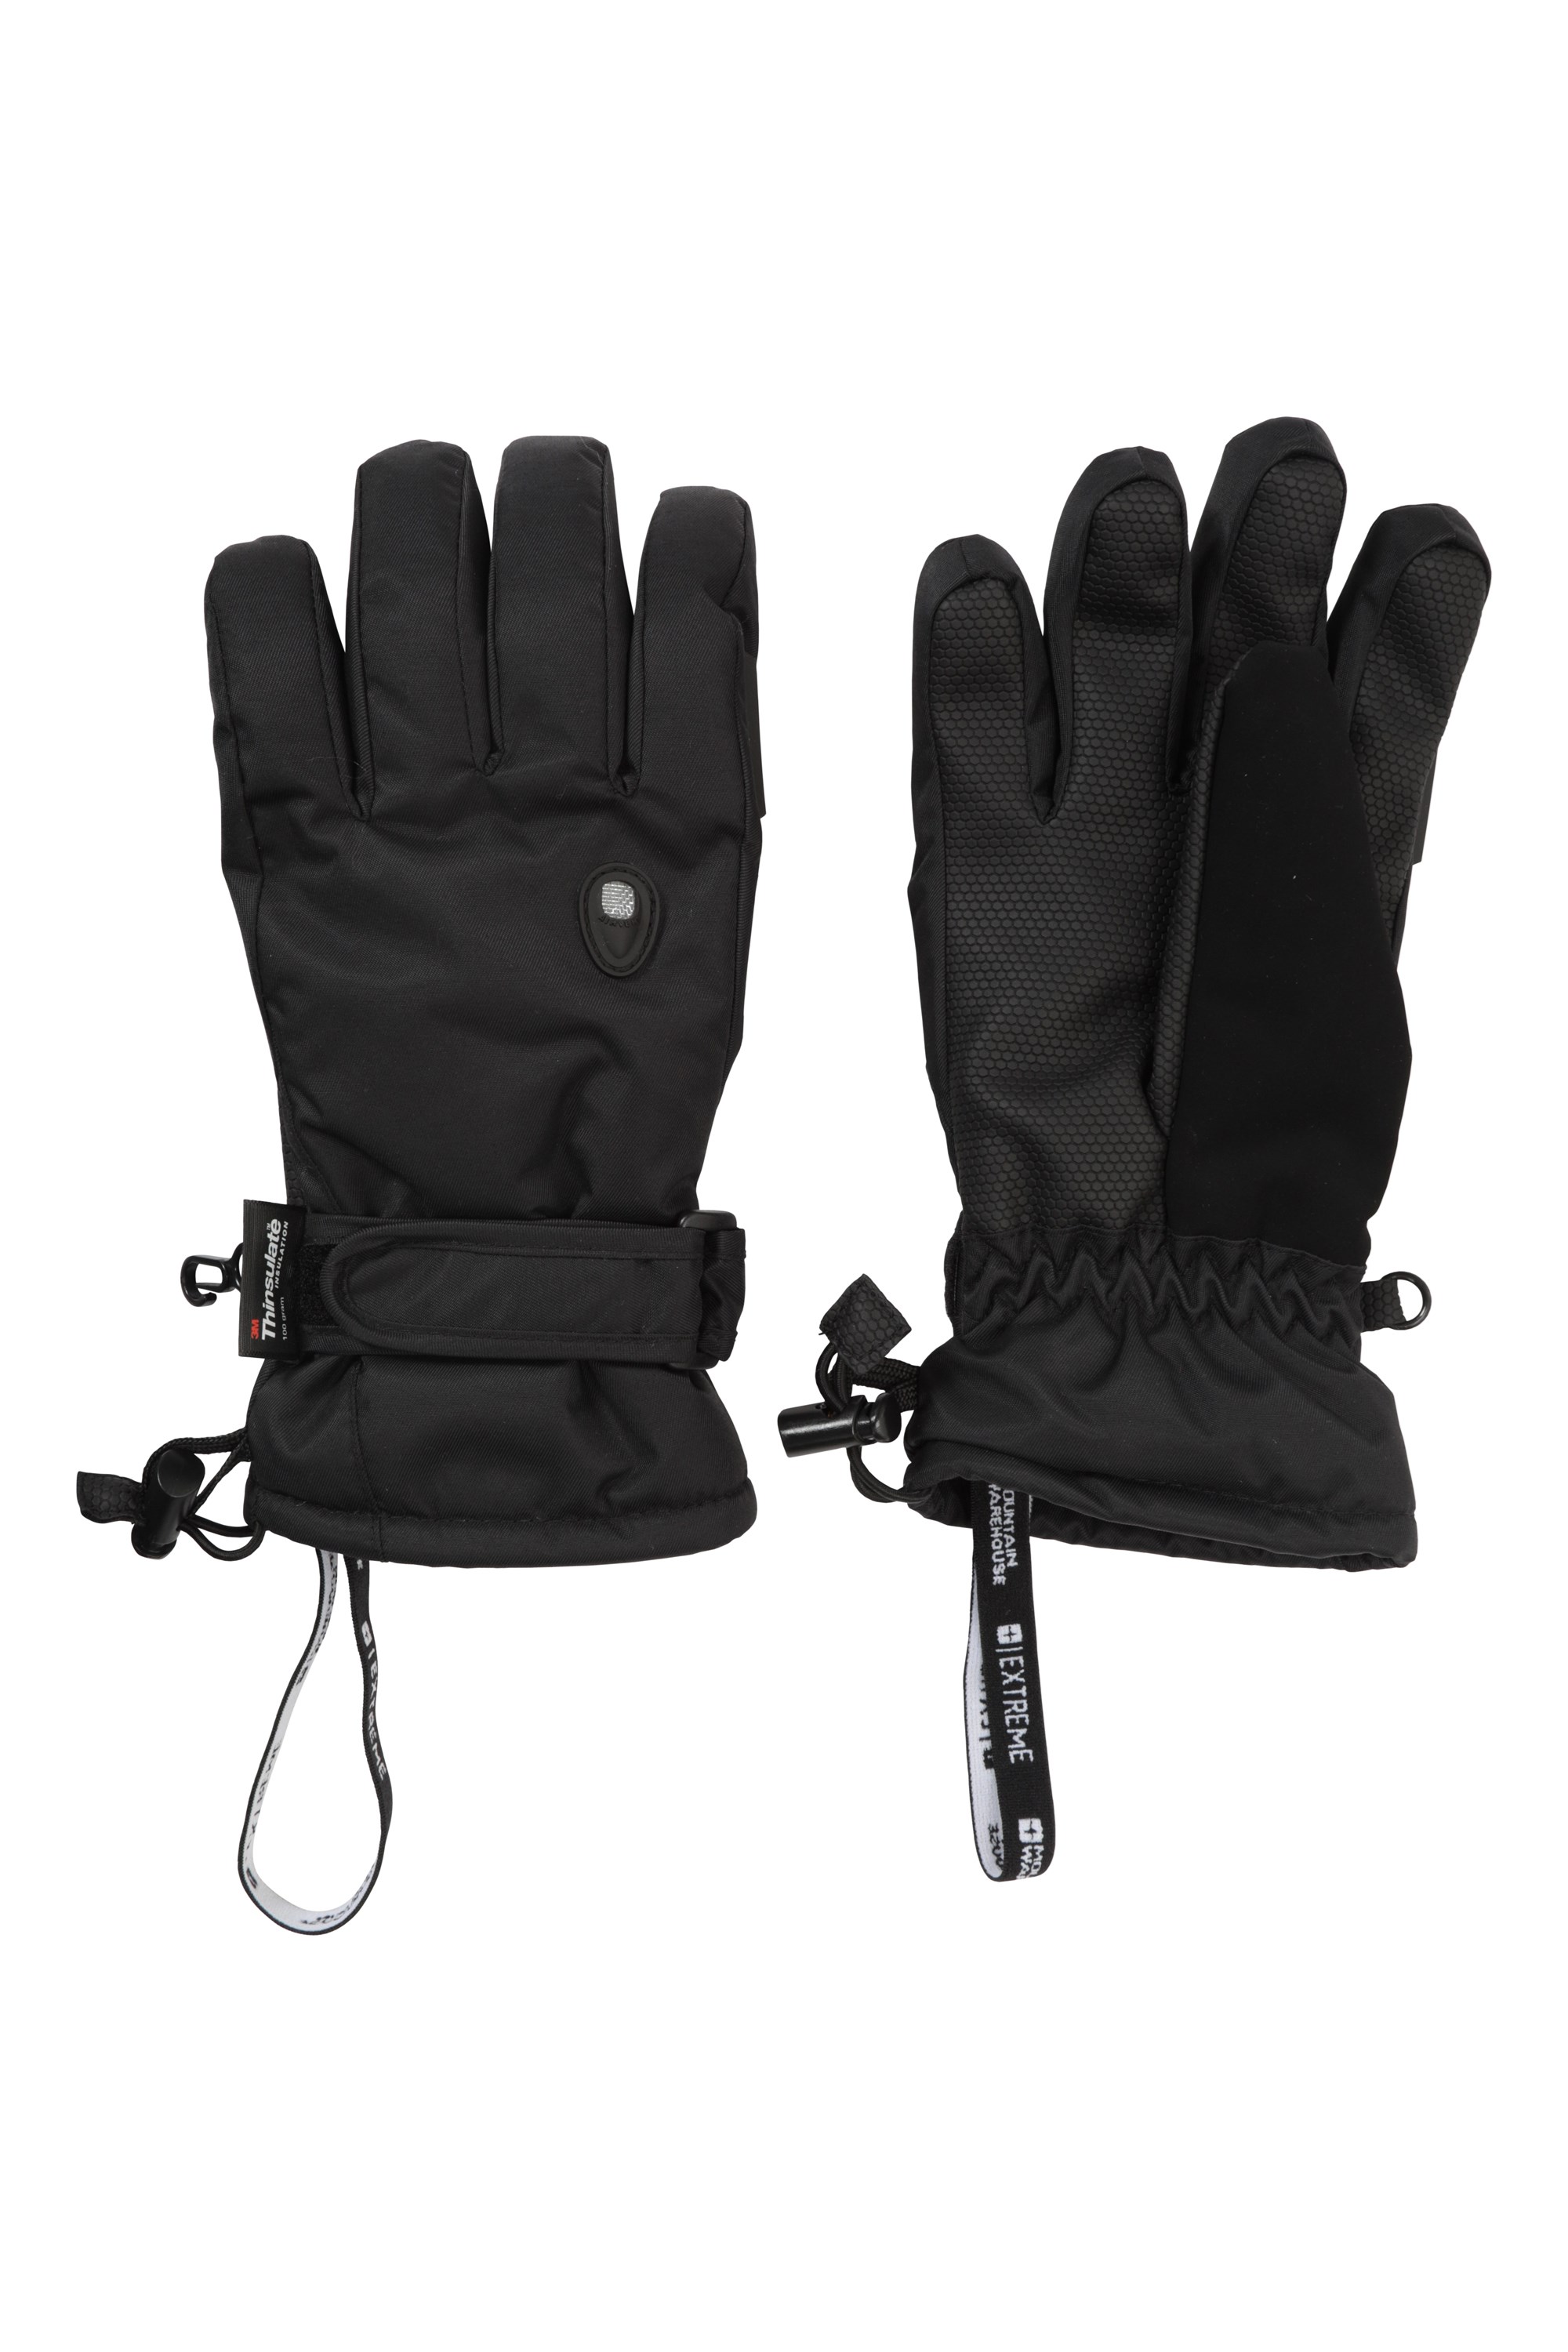 Mountain Warehouse Wms Pioneer Waterproof Womens Ski Glove Gloves 